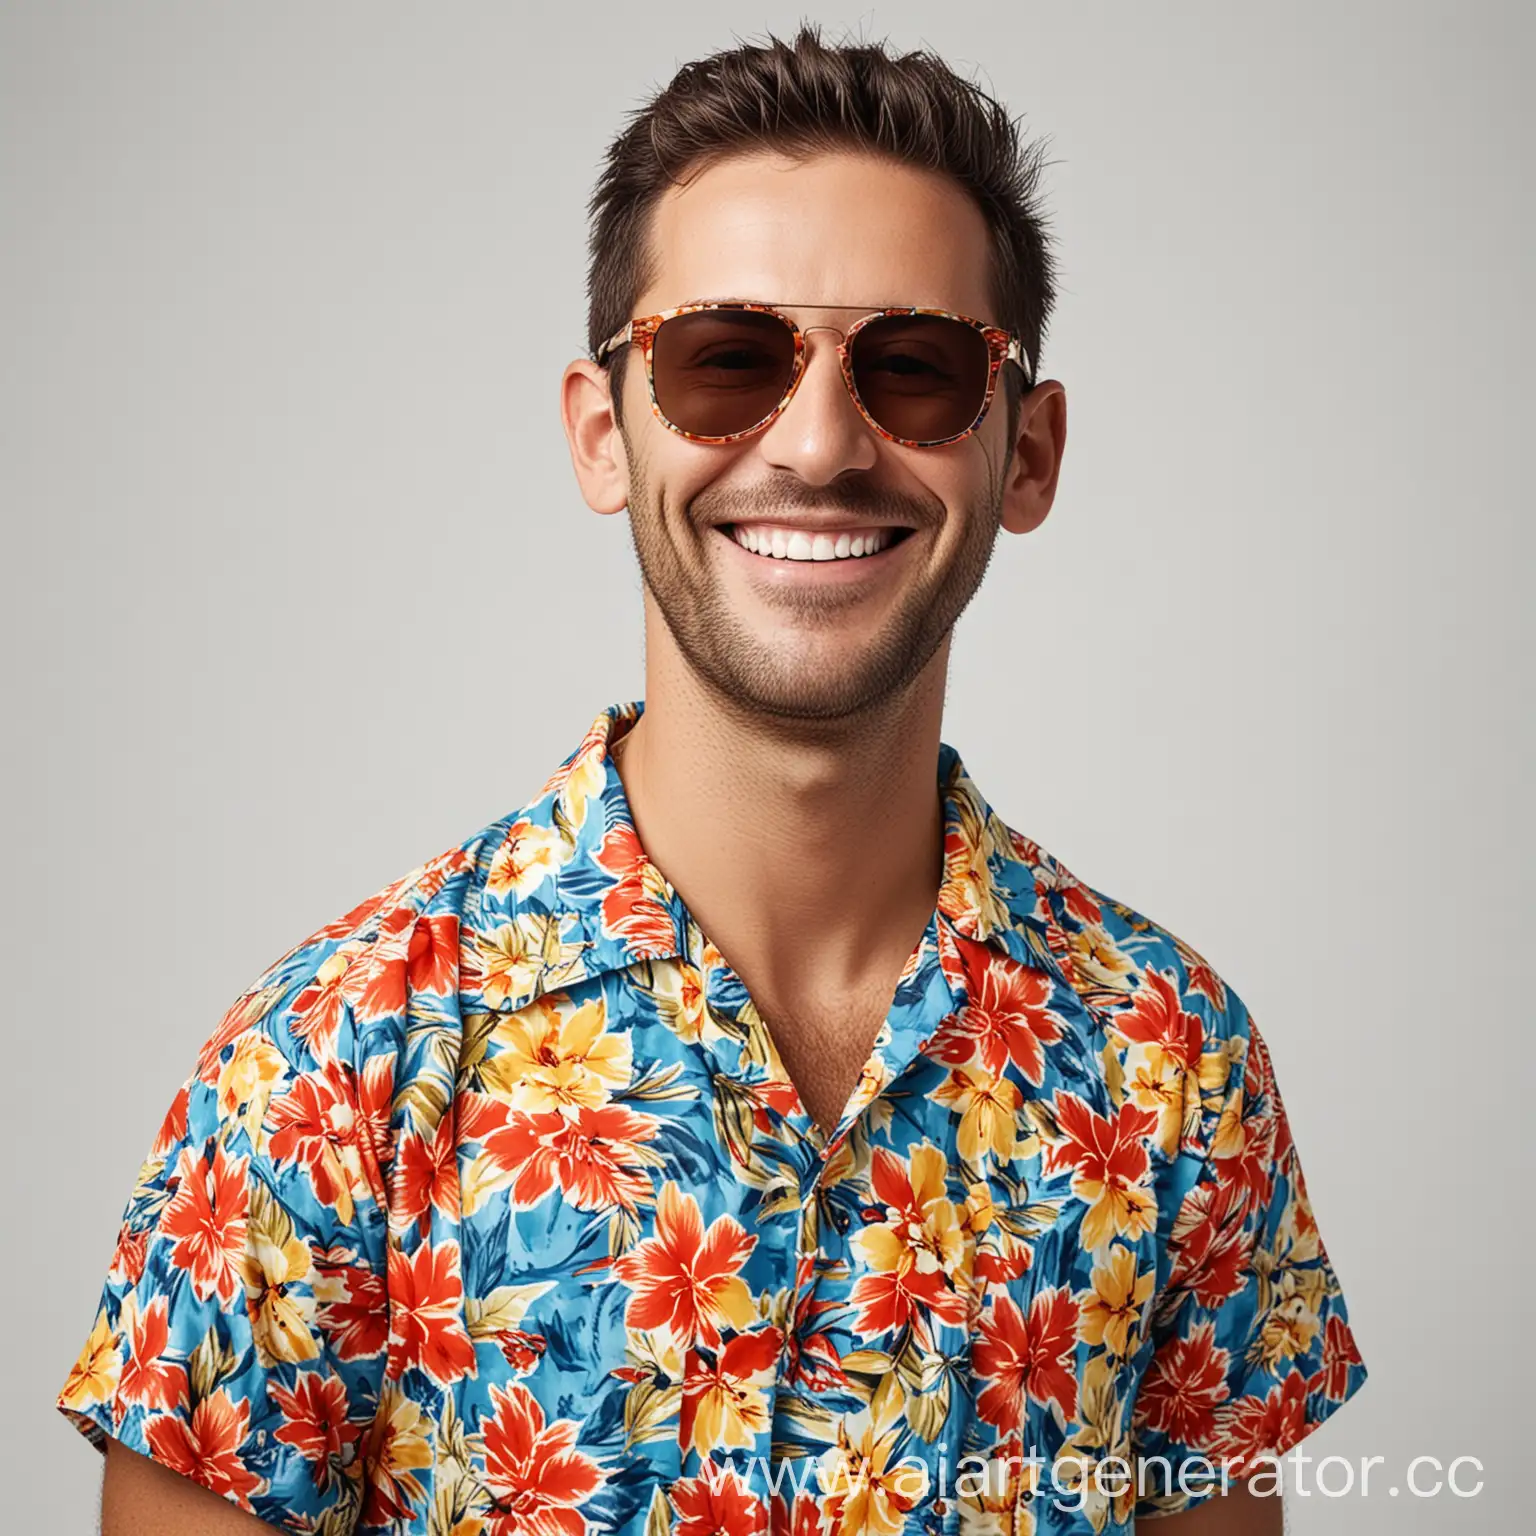 Cheerful-Man-in-Hawaiian-Shirt-and-Sunglasses-on-White-Background